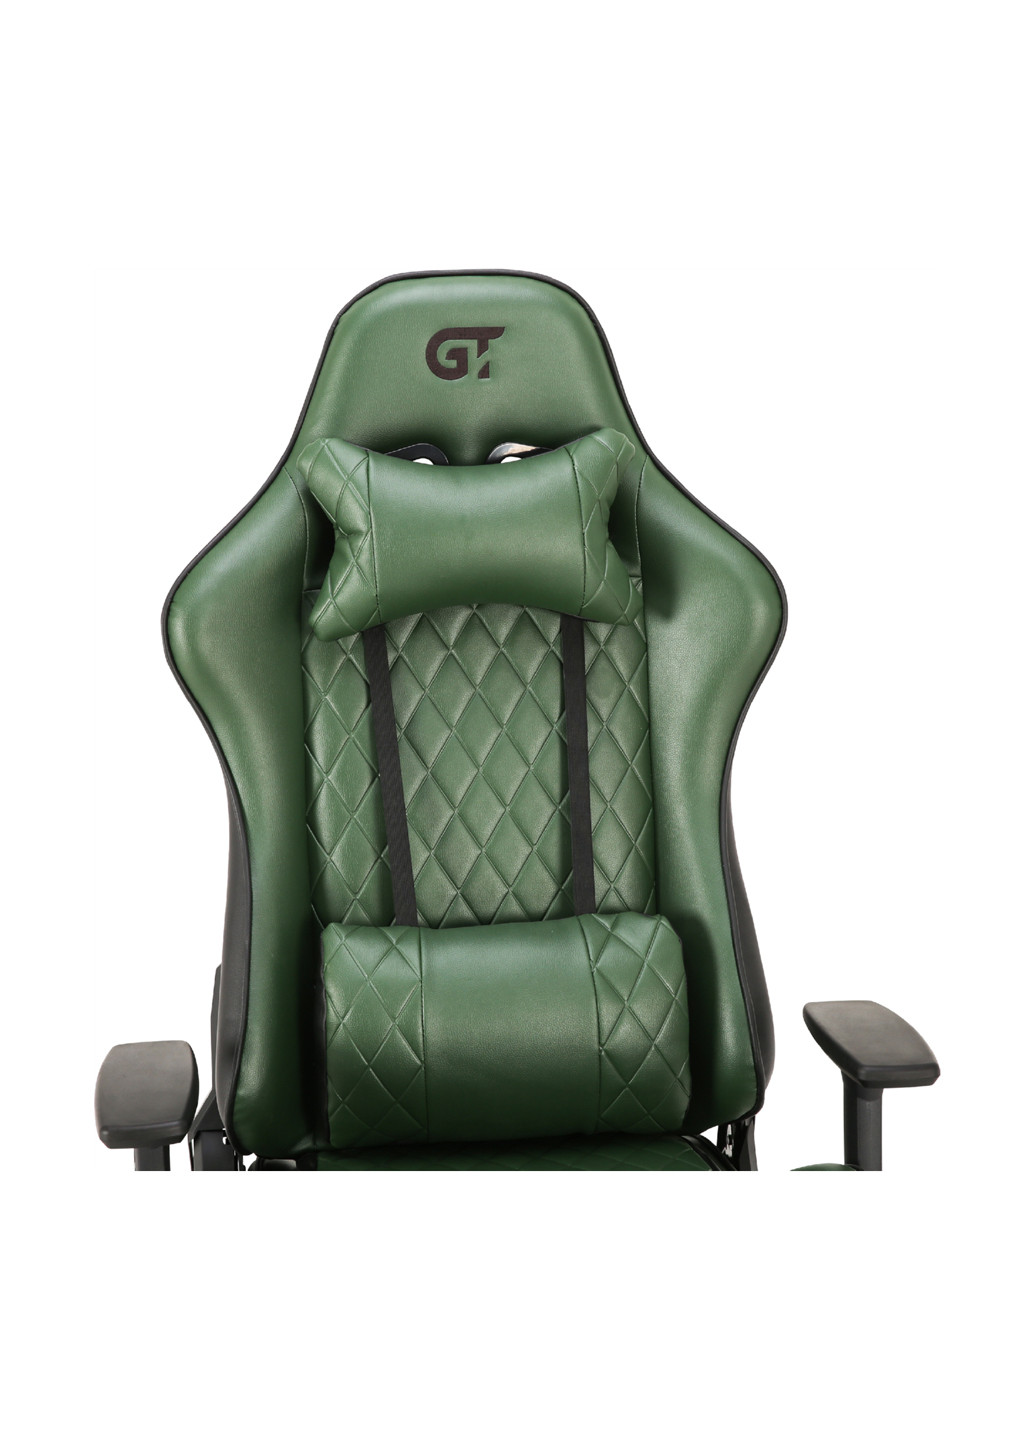 Геймерское кресло GT Racer x-2540 black/dark green (184833910)